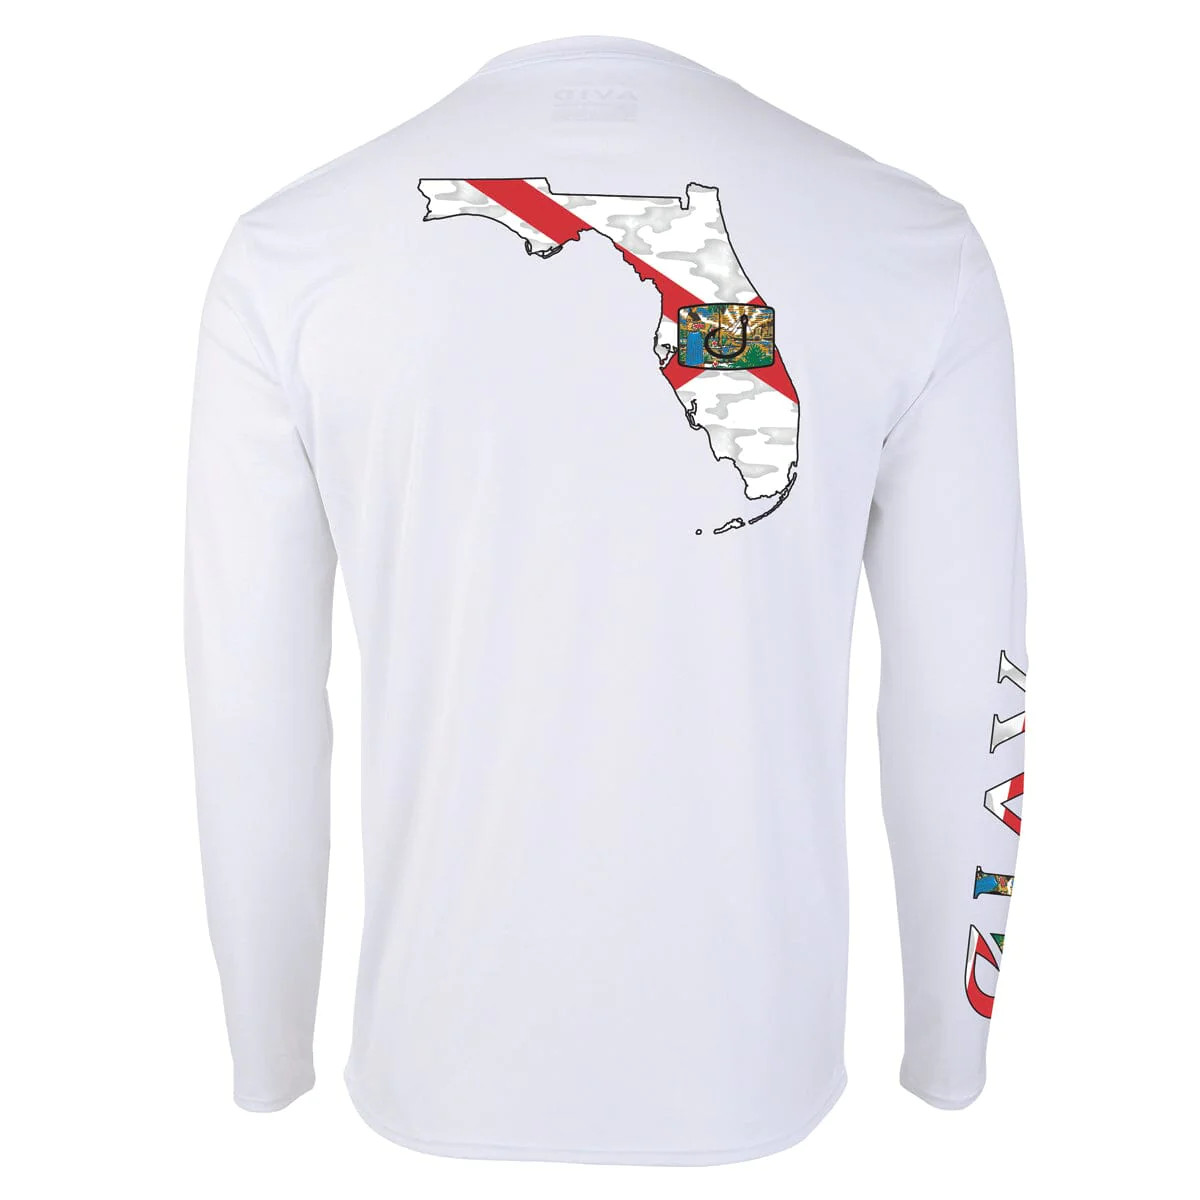 AVID Florida Native AVIDry Long Sleeve Performance Shirt (Men's) - White Back